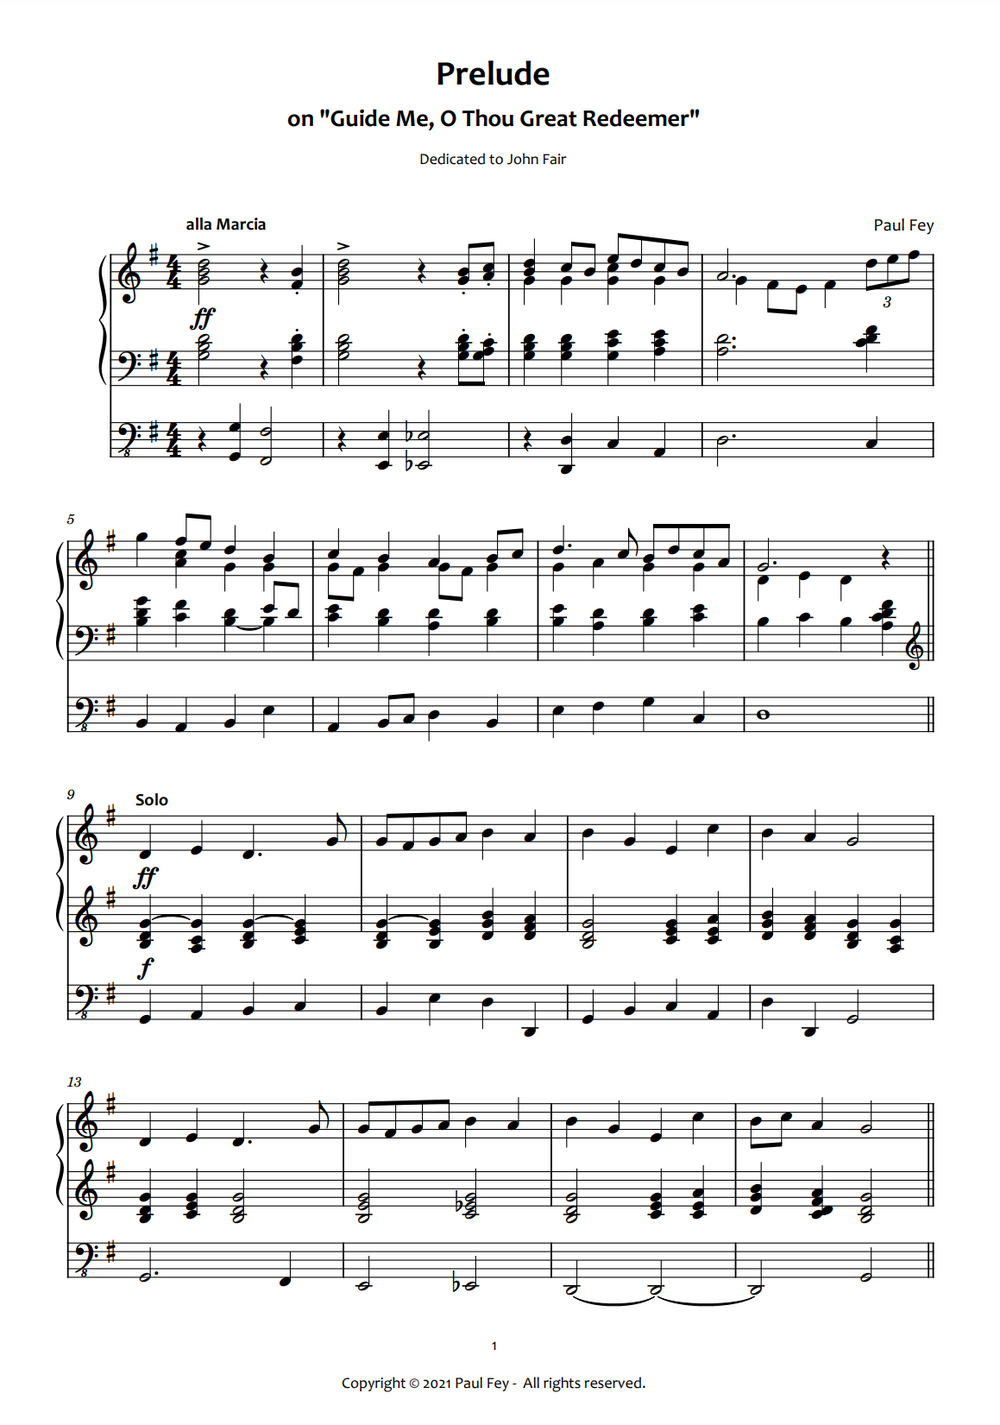 Prelude on "Guide Me, O Thou Great Redeemer" (Cwm Rhondda) - Music for Organ